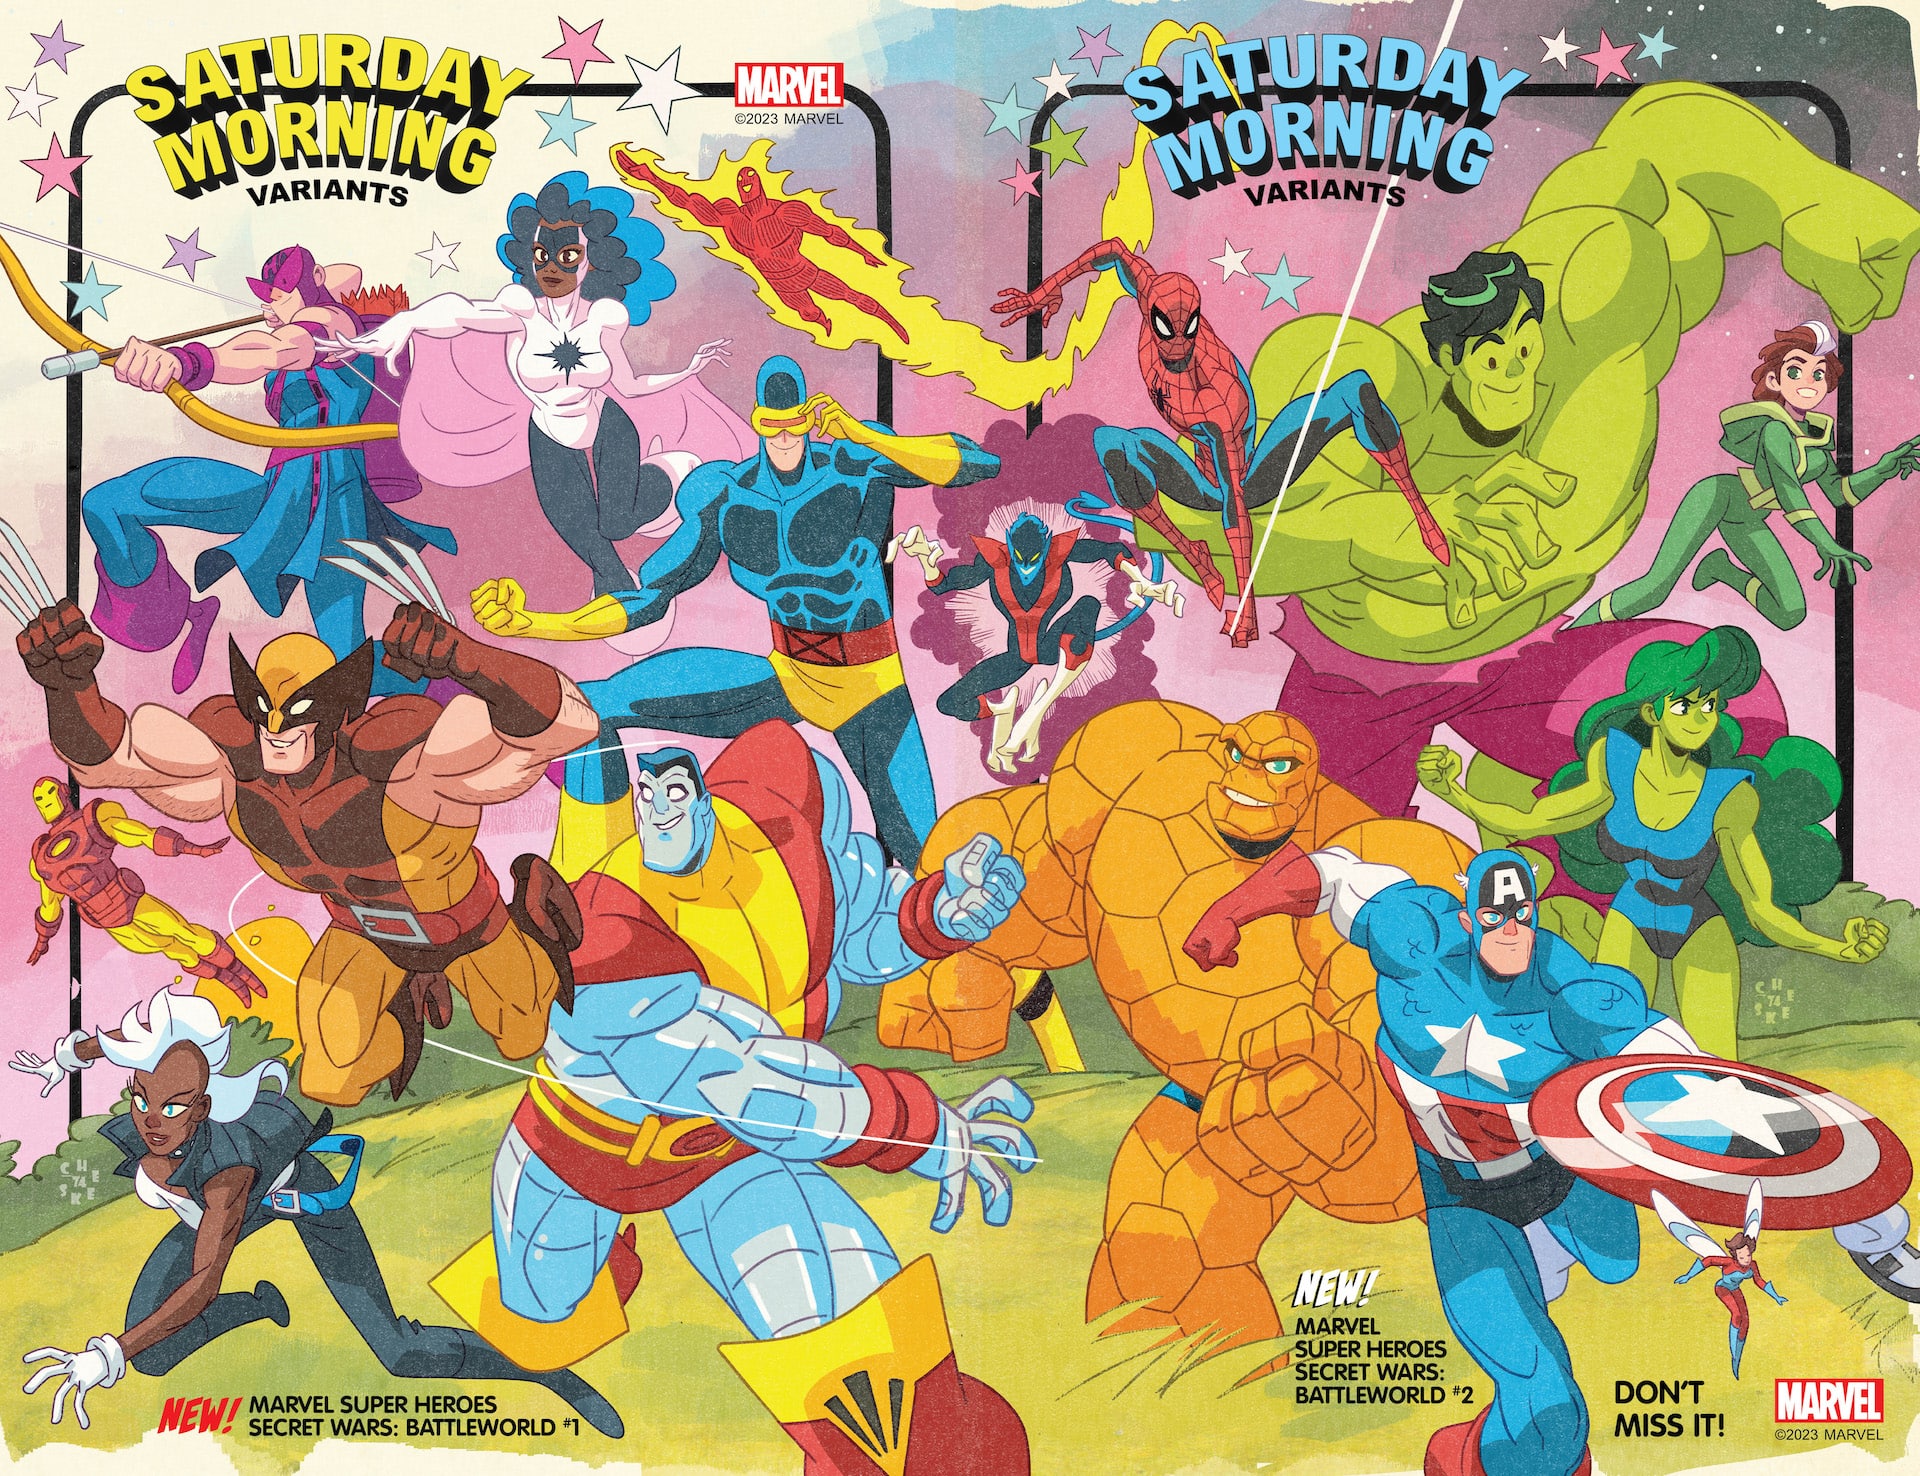 Marvel reveals more Sean Galloway 'Saturday Morning' variant cover art